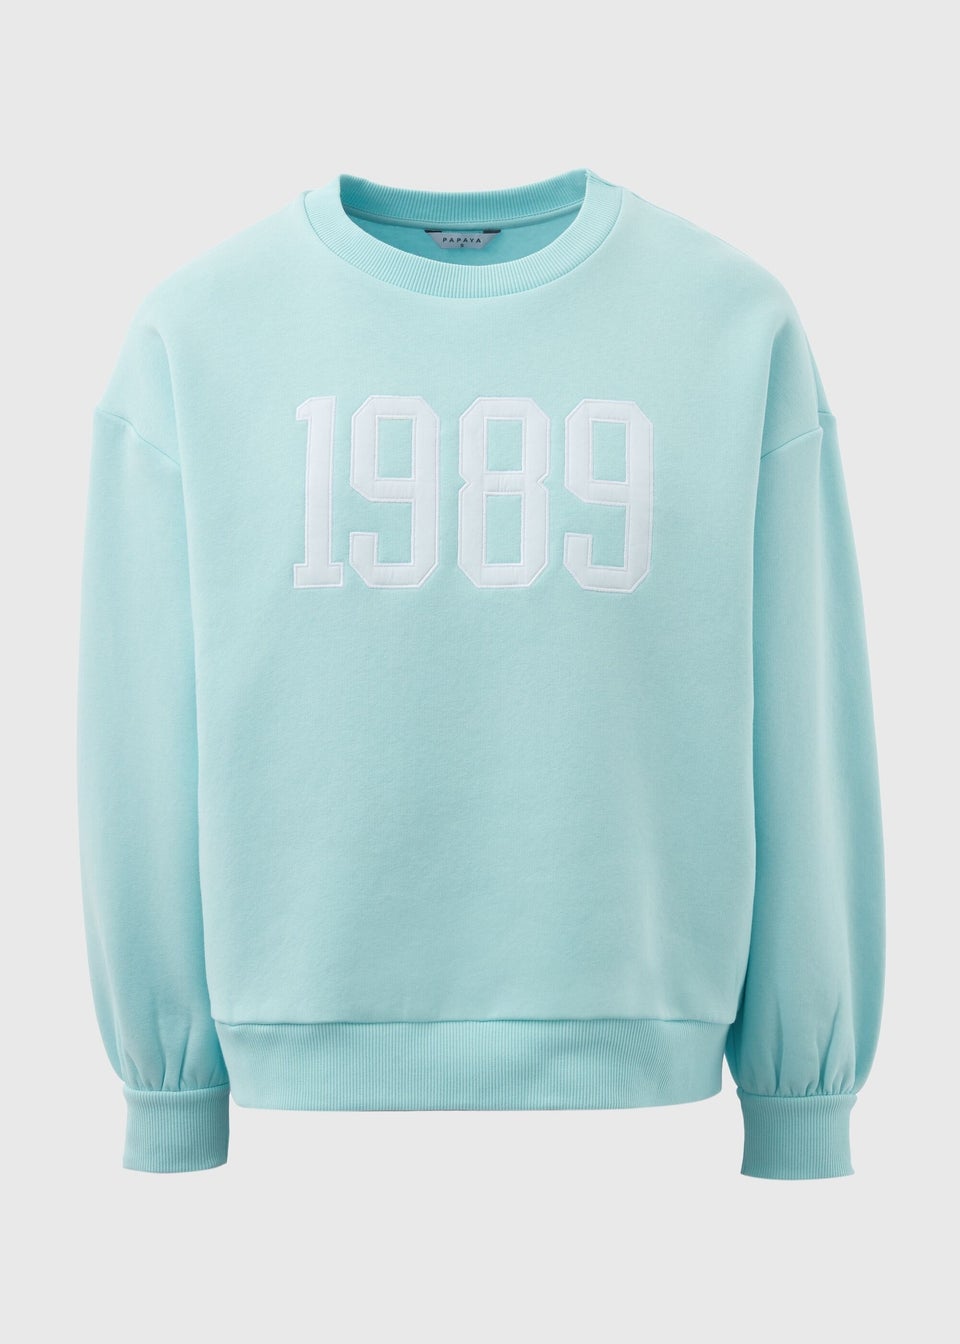 Blue 1989 Co Ord Sweatshirt